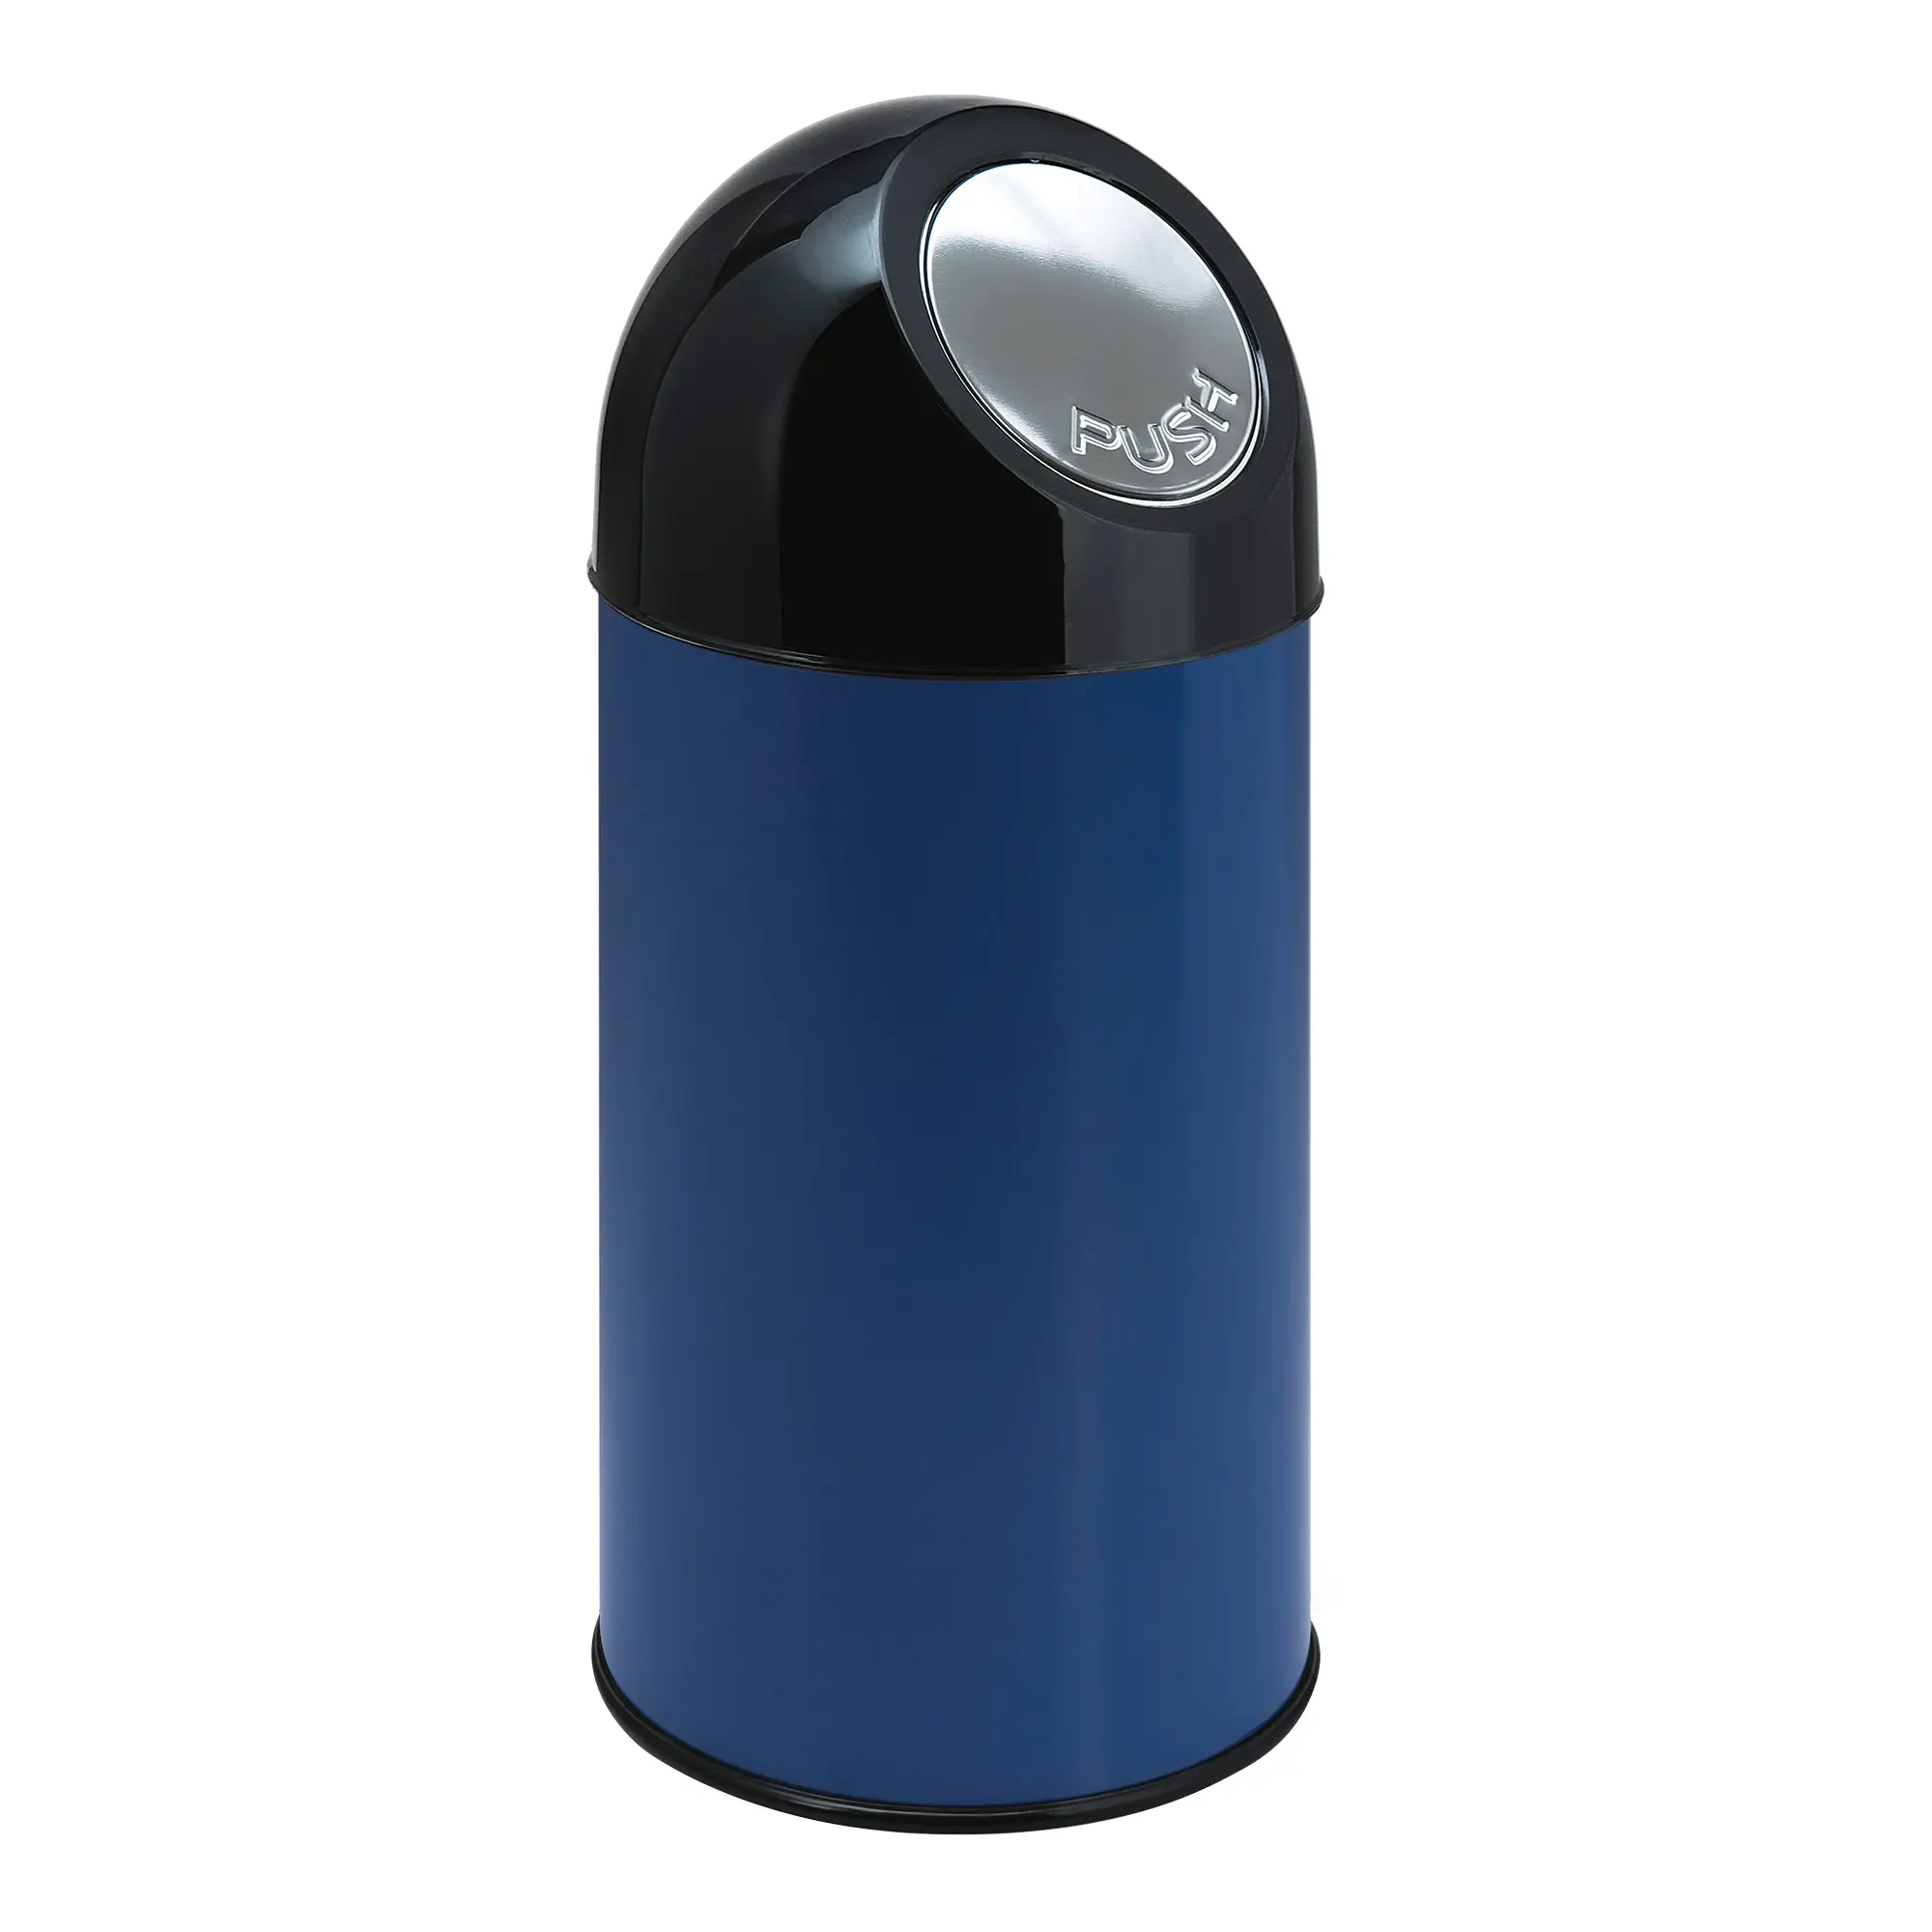 V-Part Abfallbehälter Edelstahl-Pushklappe 40 Liter blau/schwarz 31003396_1